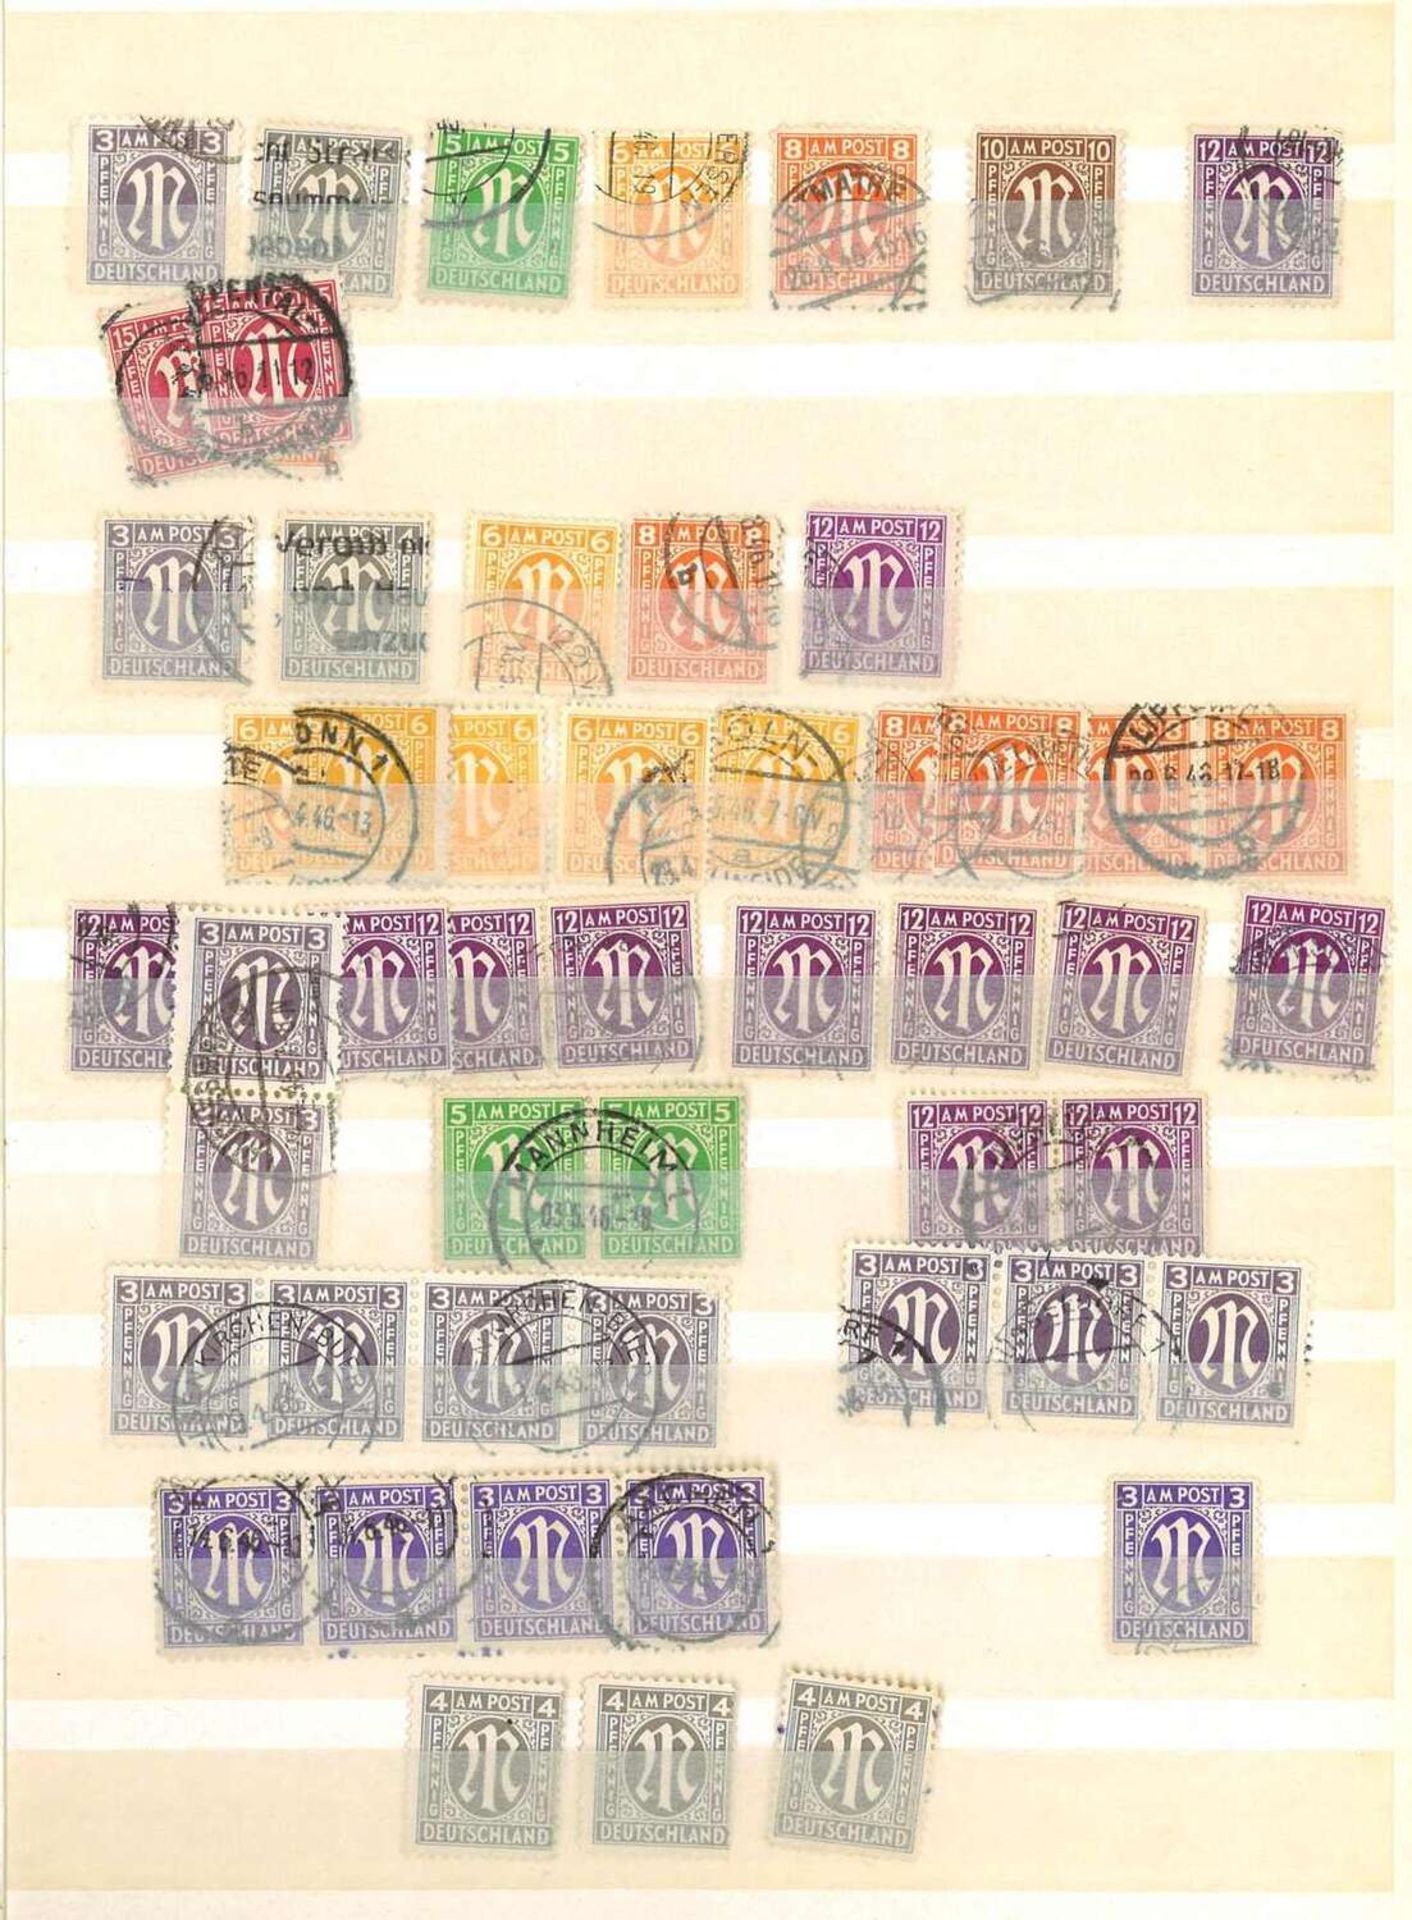 Kleines Lot Philatelie, dabei Michel, Loseblatt Briefmarken Katalog, etc. Small lot of philately, - Image 2 of 3